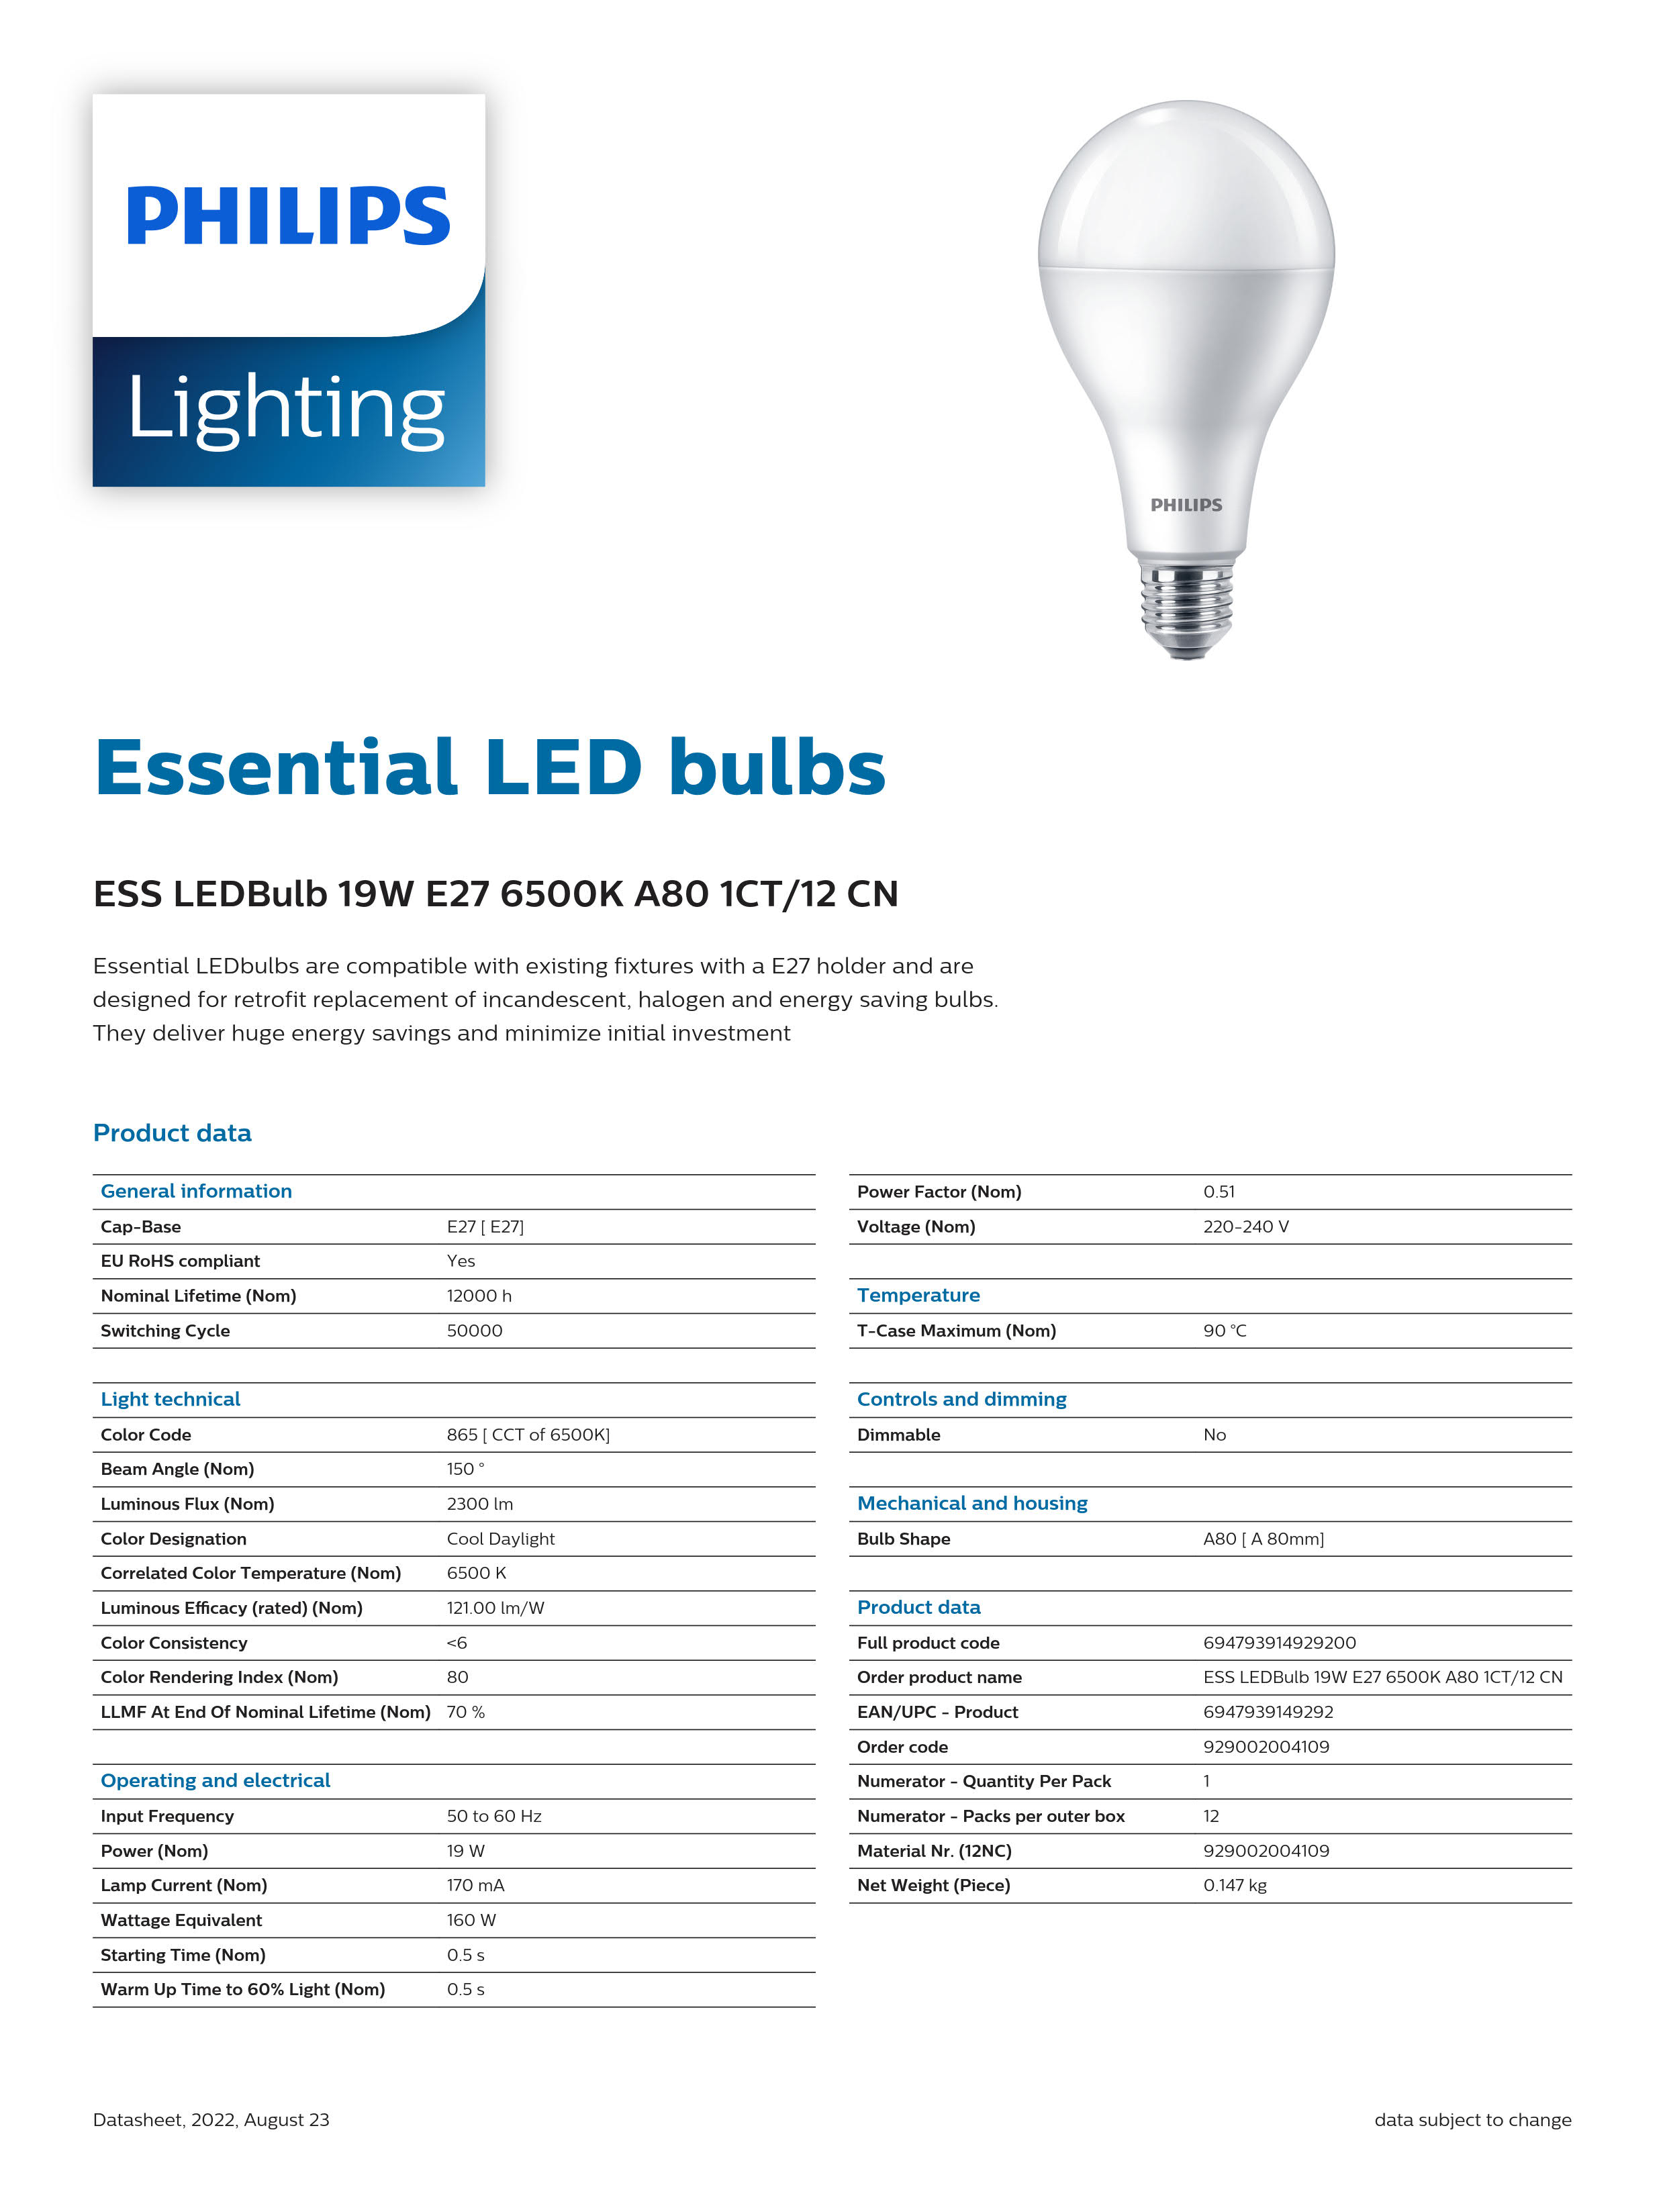 PHILIPS Essential LED bulbs 19W E27 6500K 230V 1CT/12 CN 929002004109